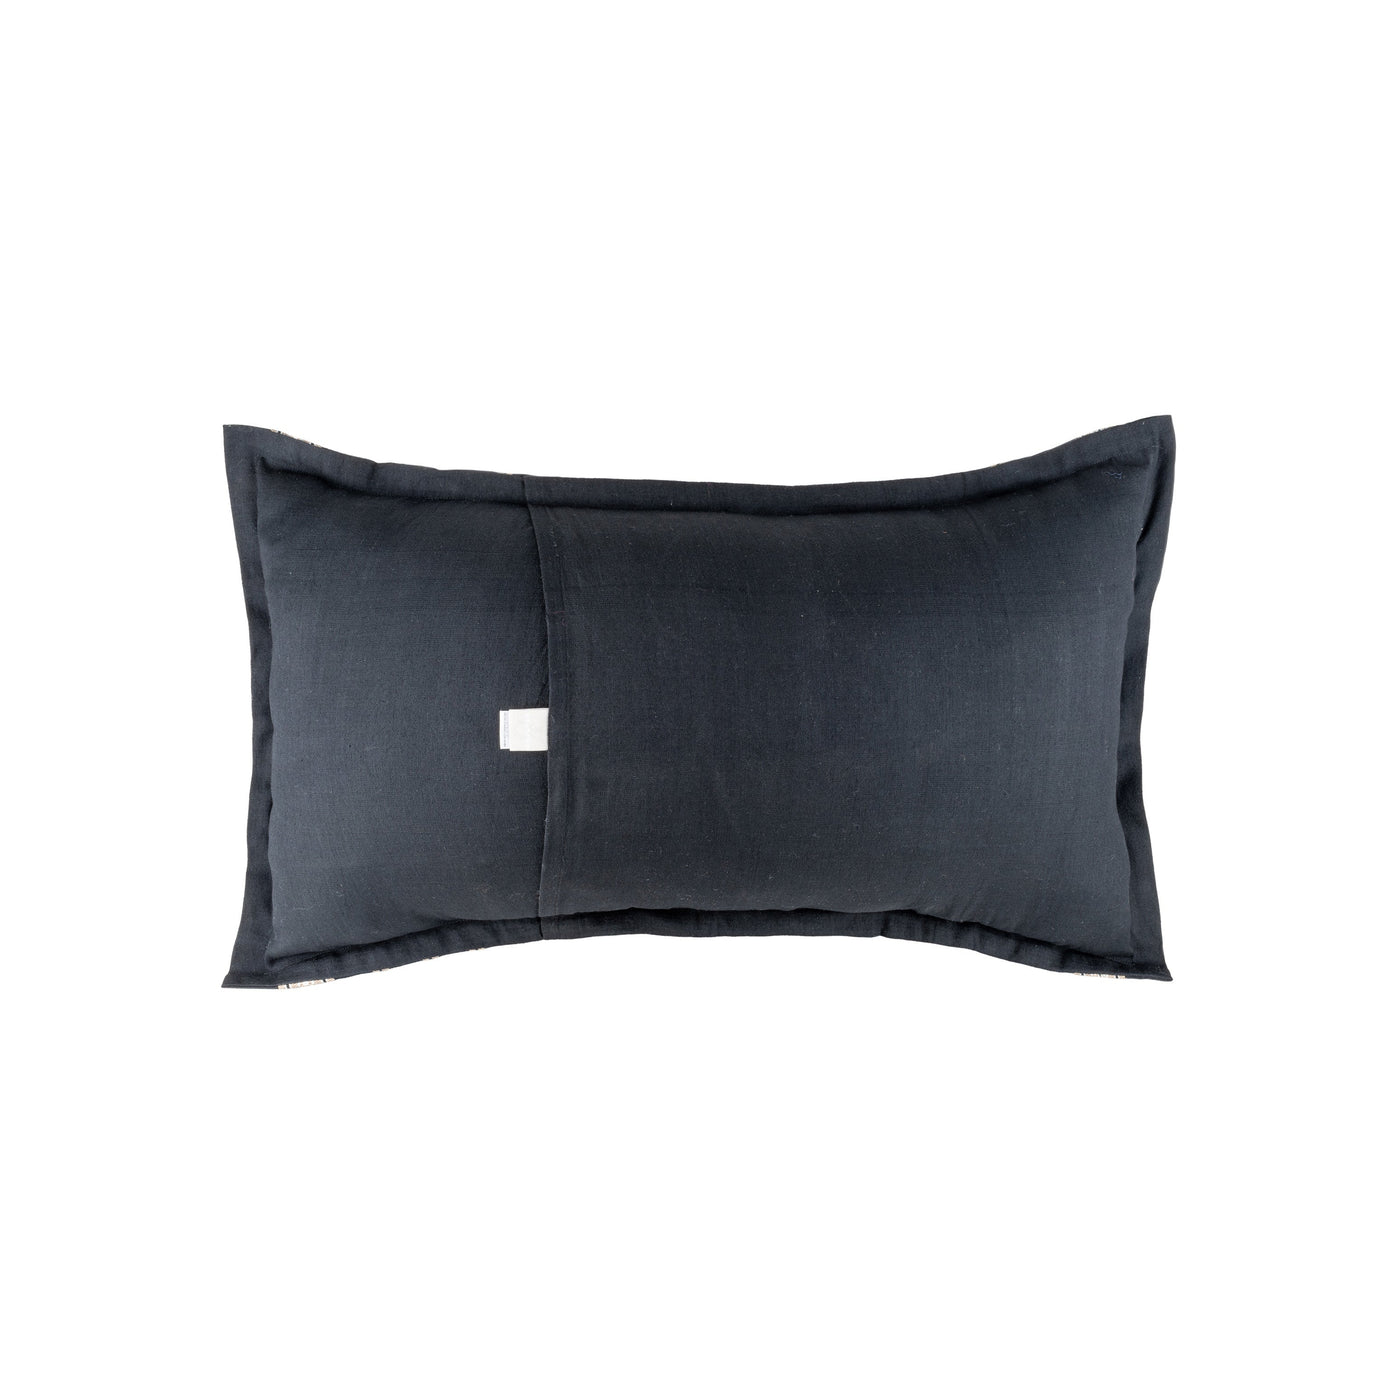 Cadena Negro Cushion Cover